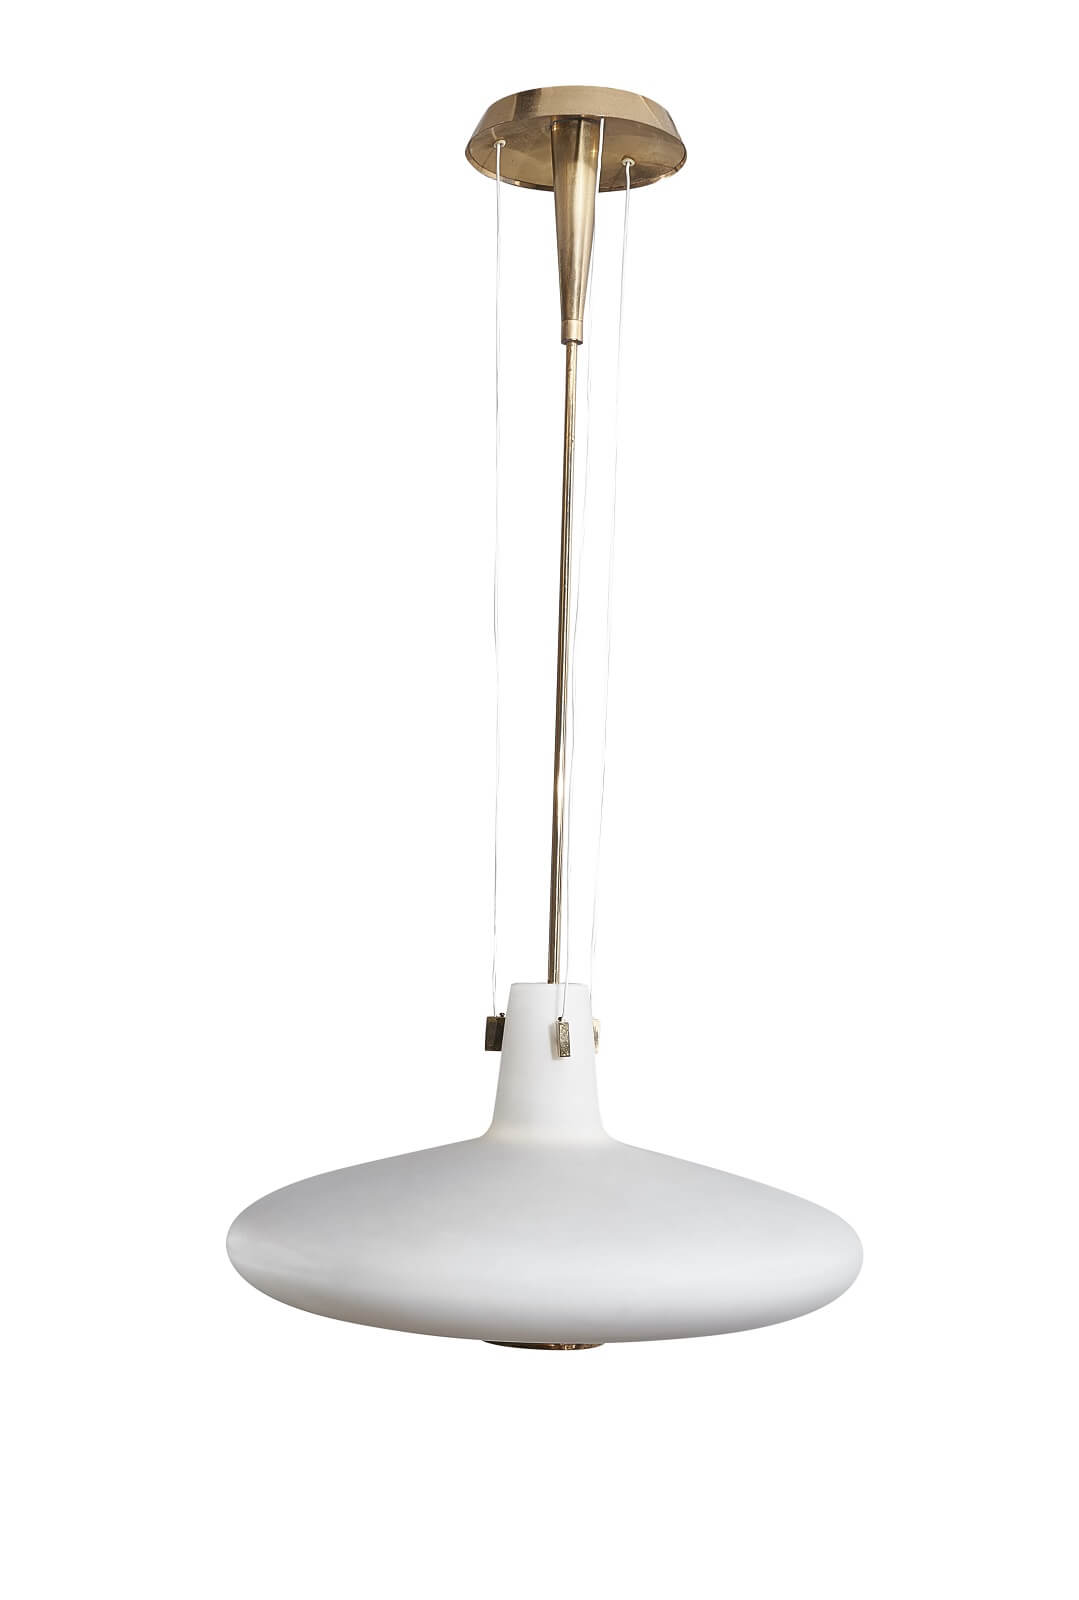 Ceiling lamp by Stilnovo for sale